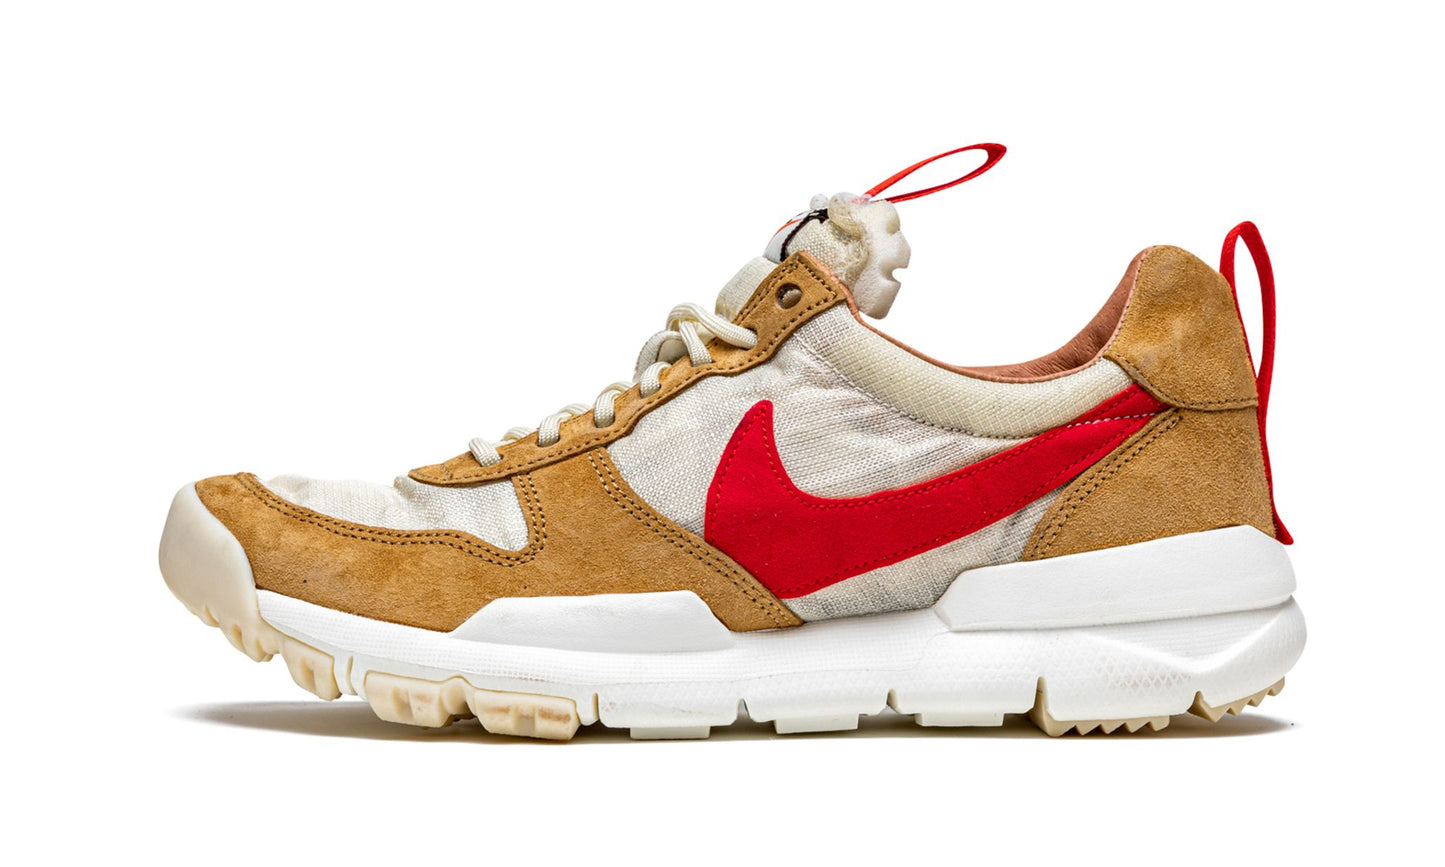 Nike Mars Yard Shoe